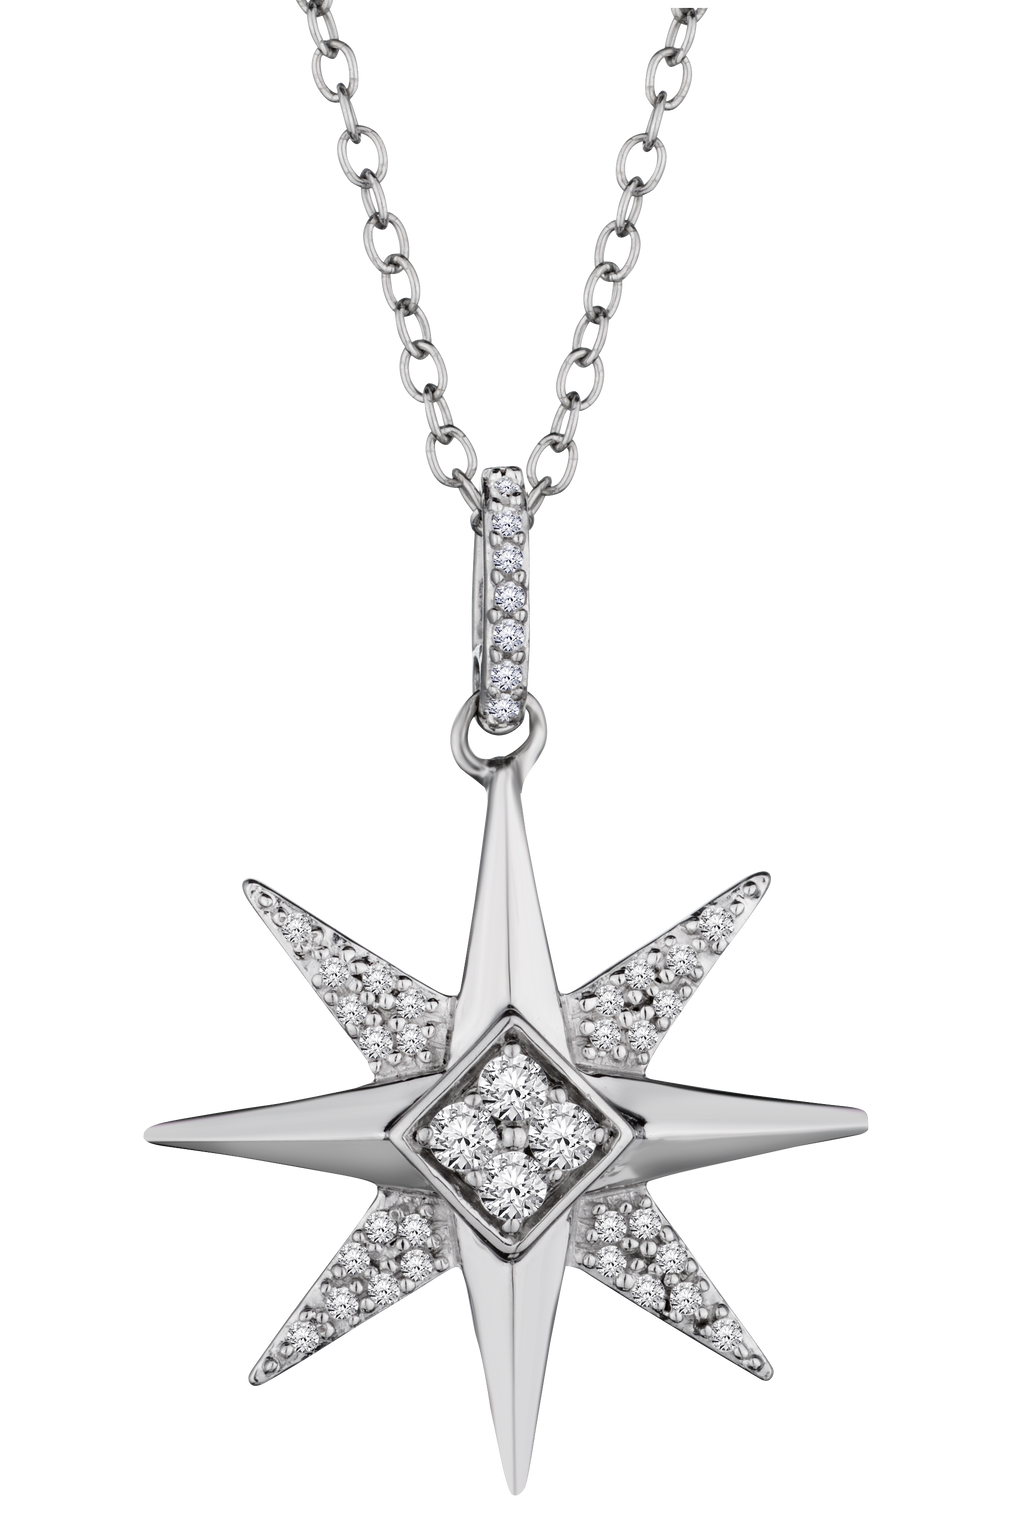 .20 Carat of Diamonds "Star of Light" Pendant, Silver.....................NOW